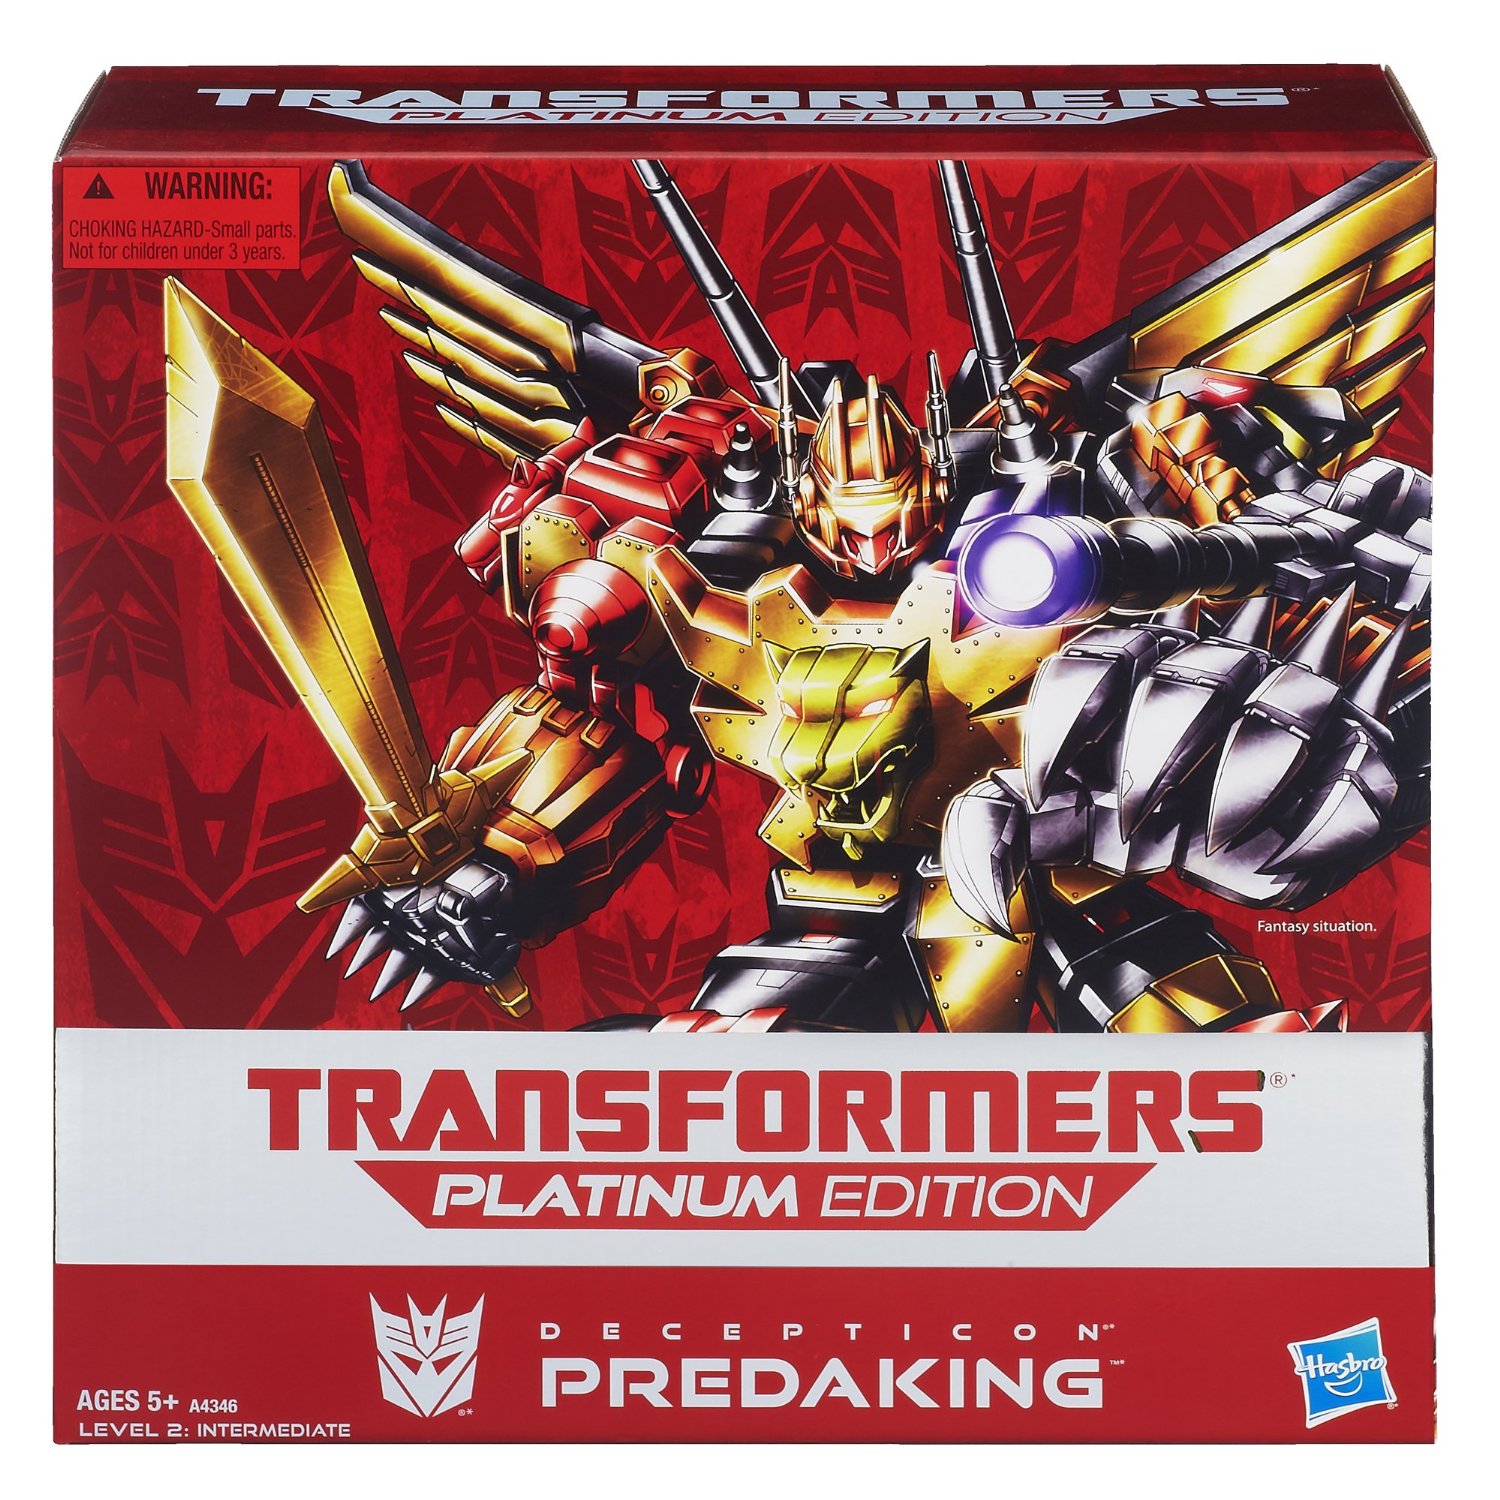 Transformer edition. Hasbro Transformers Предакинг. Transformers Platinum Edition. Предакинг трансформер g1 фигура. Transformers Combiner Predaking.